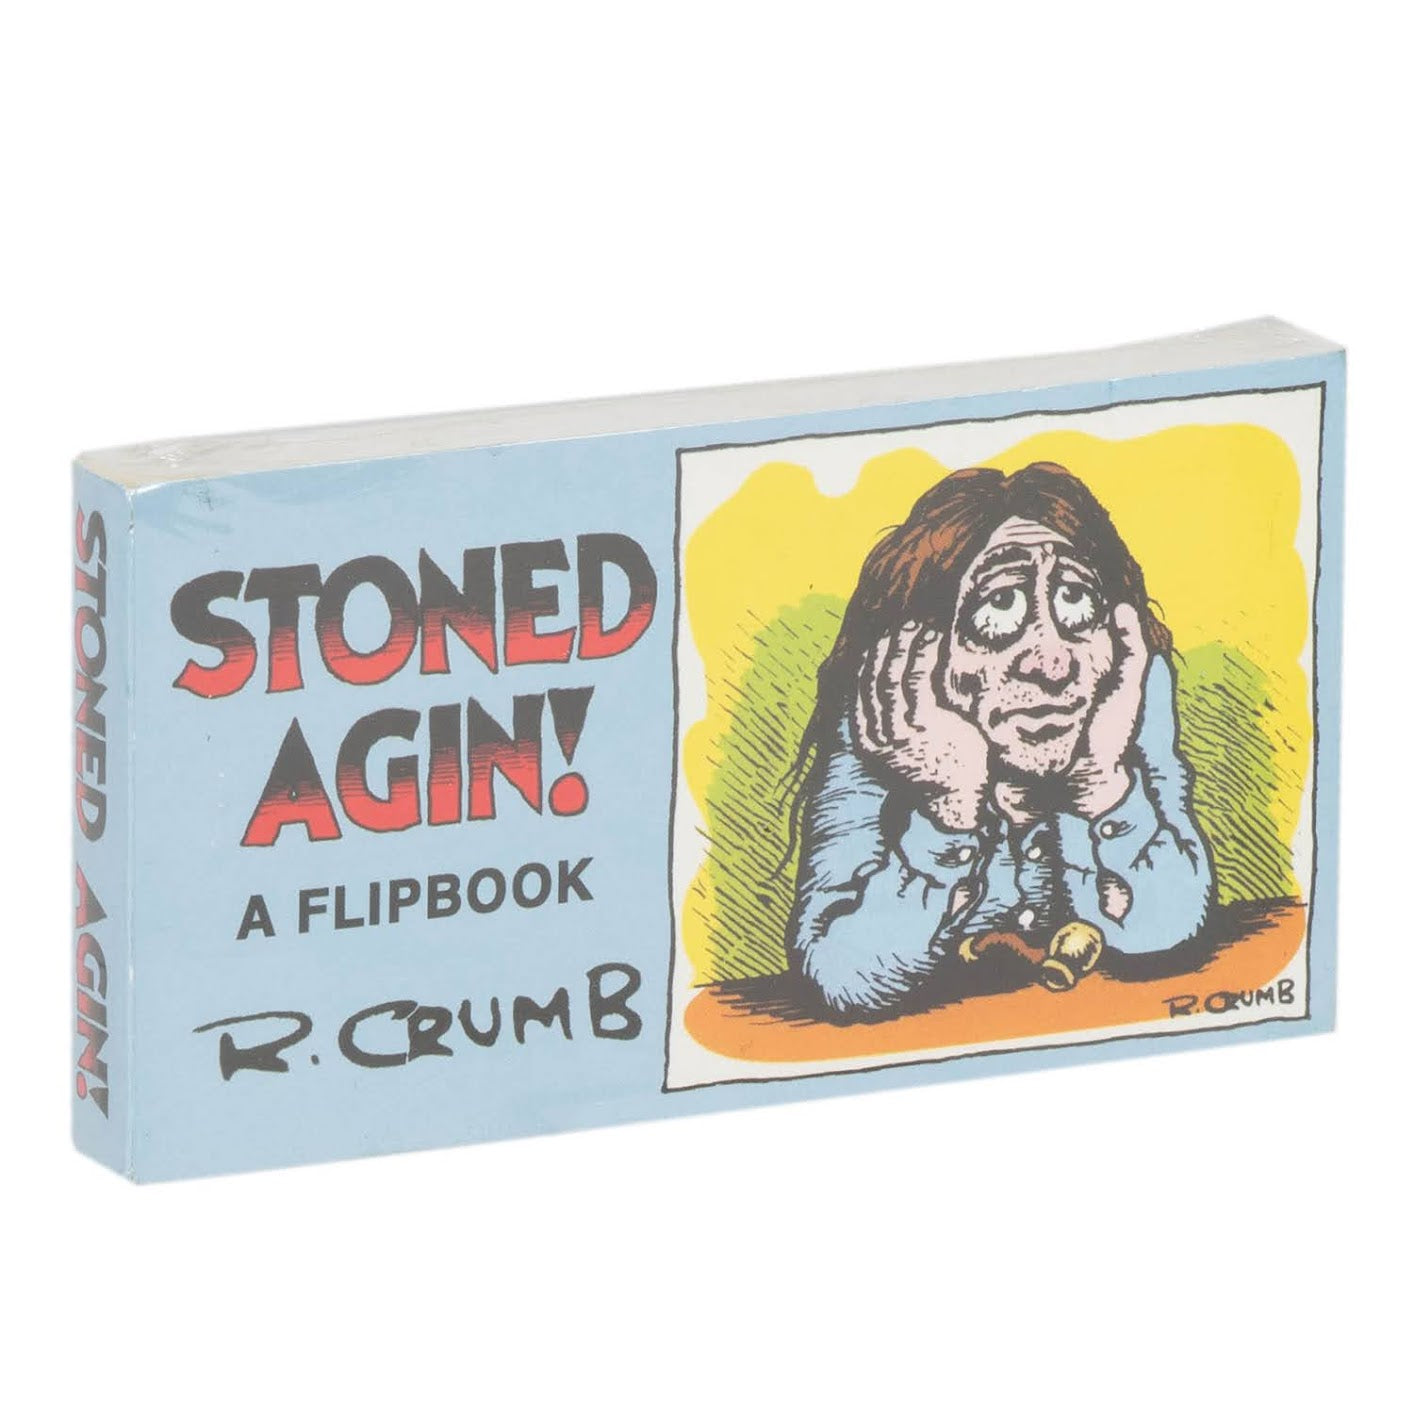 CIRCLES BOOKS Fliptomania R. Crumb Flipbook --Stoned Agin!